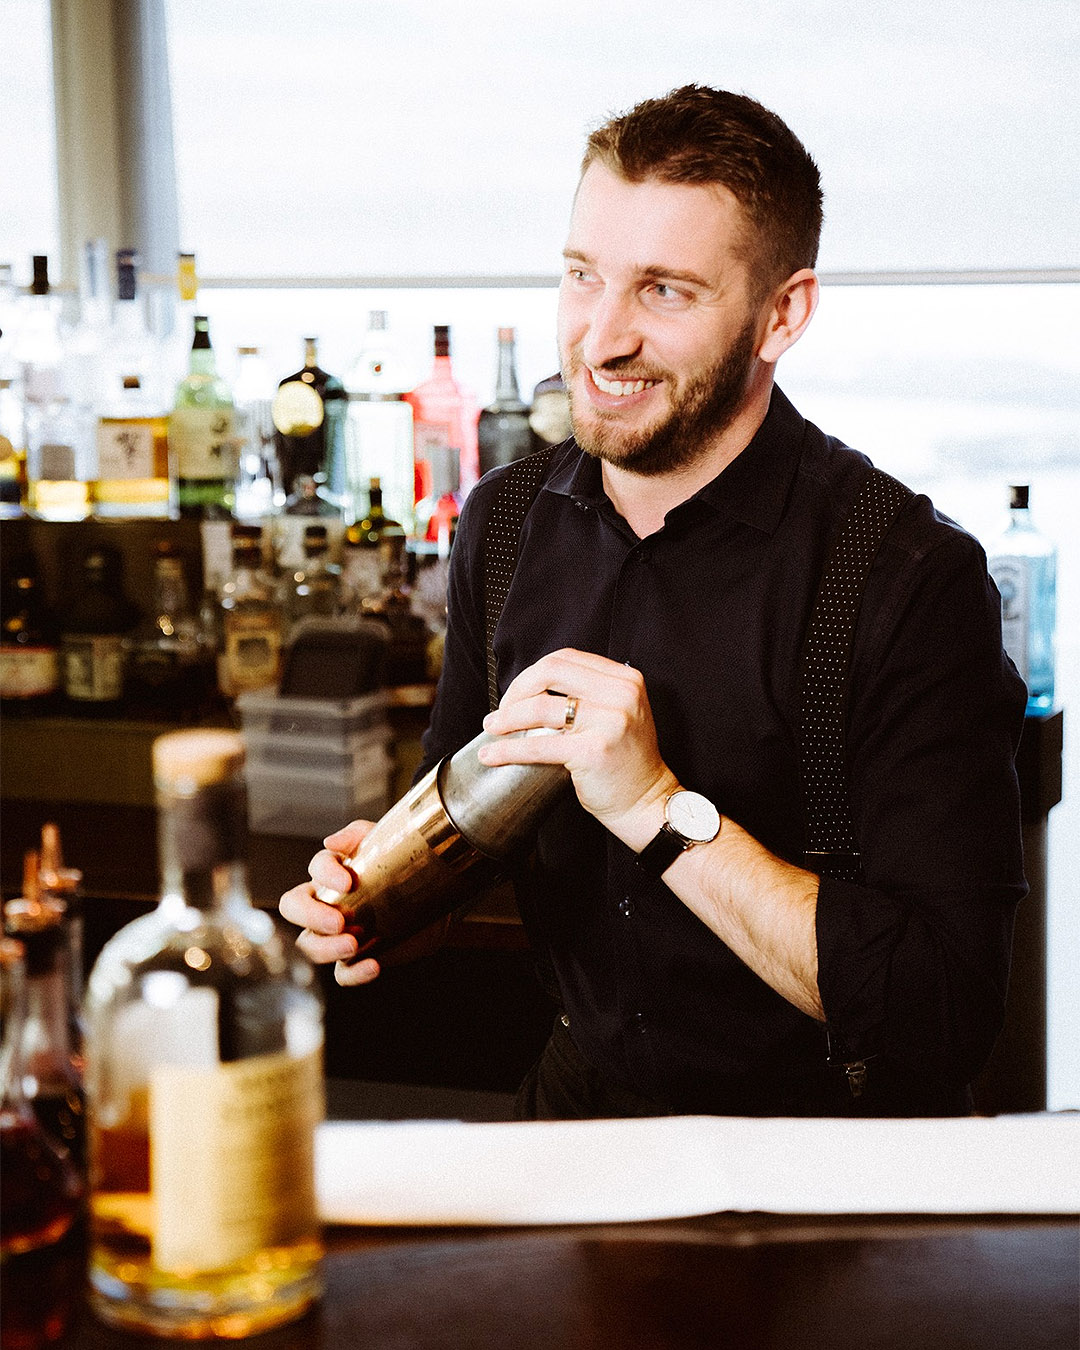 Johan from the Sugar Club prepares a cocktail.